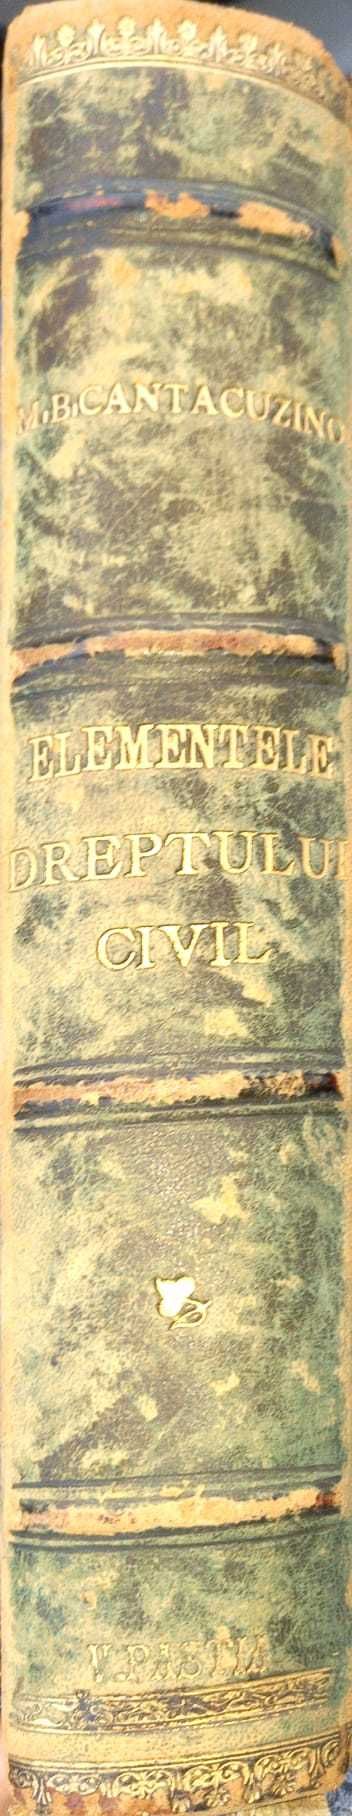 Drept Civil, Elementele dreptului civil, M. B. Cantacuzino, 1926